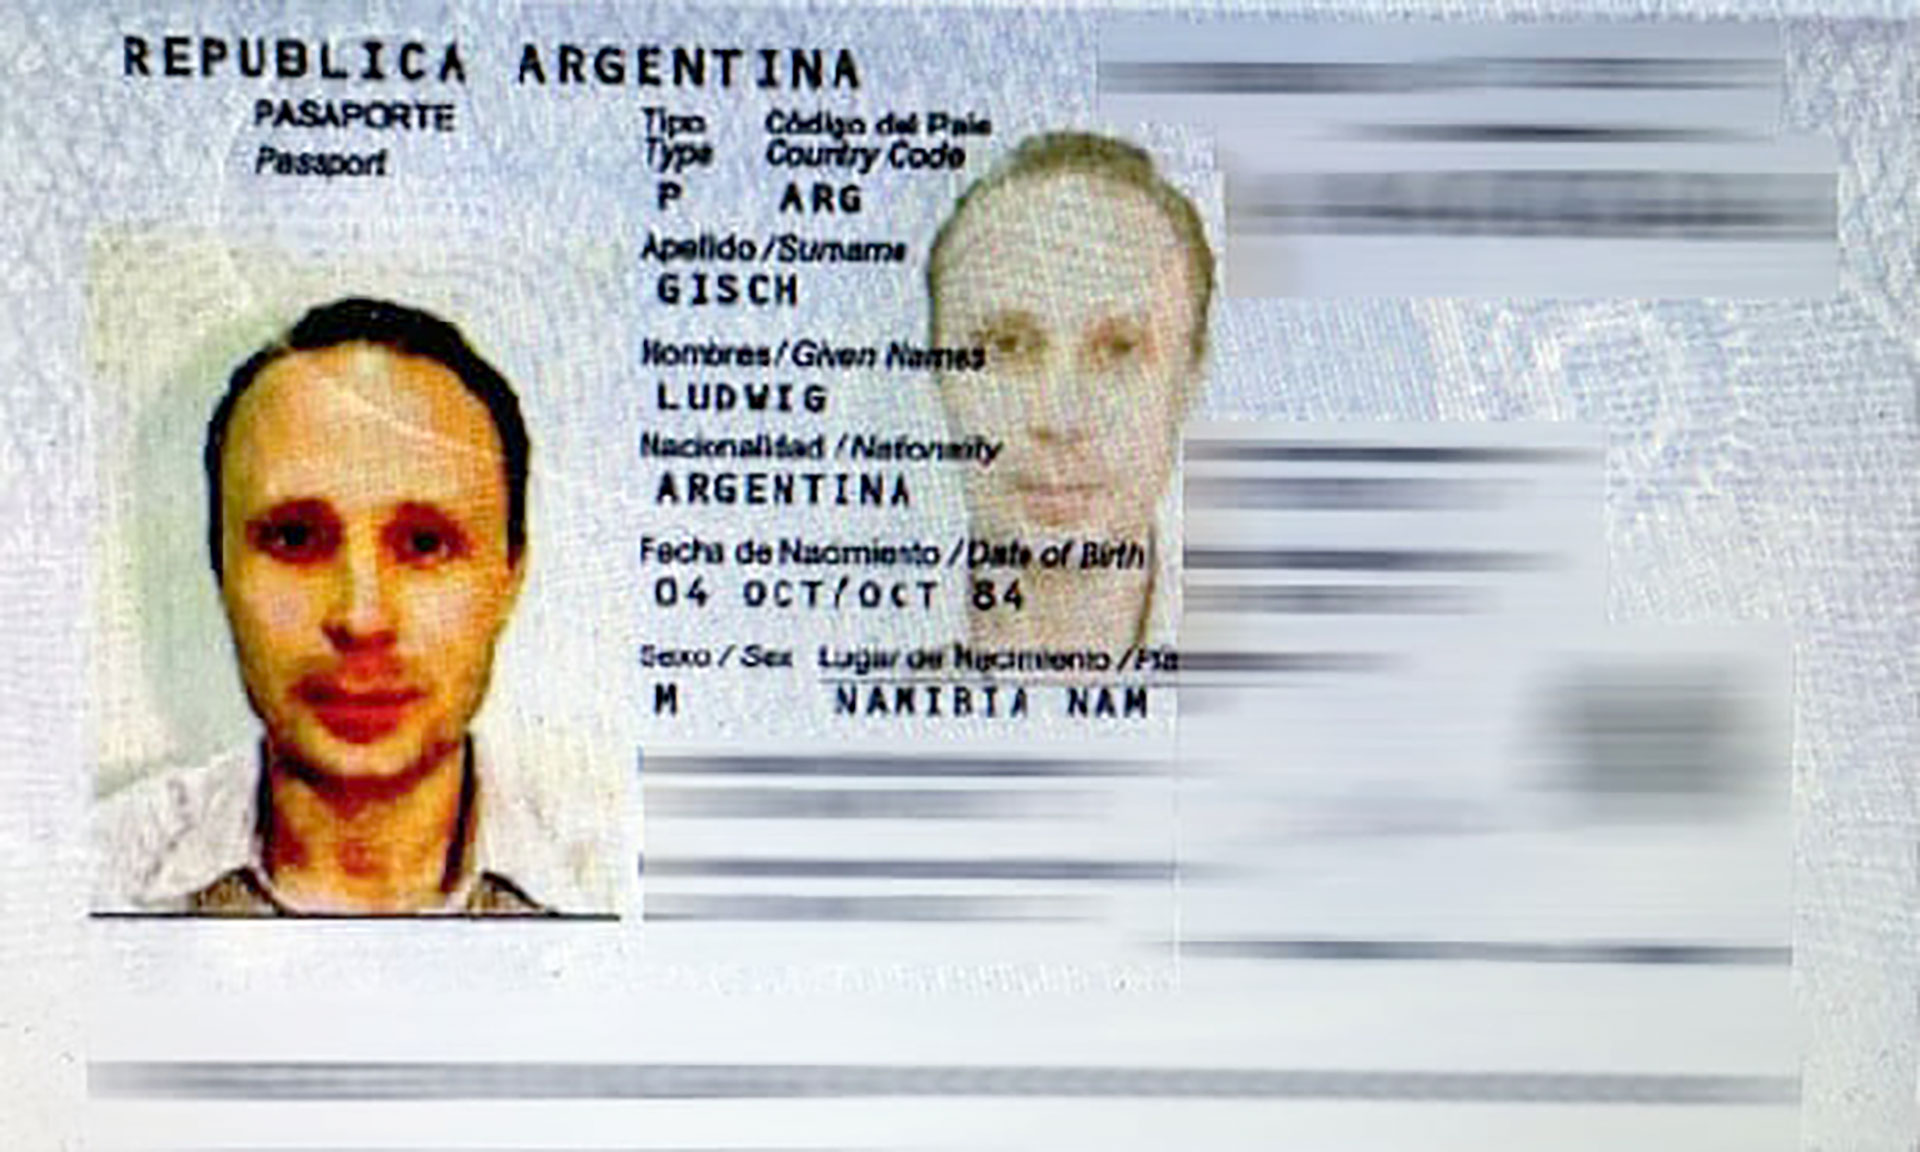 El pasaporte argentino de Gisch